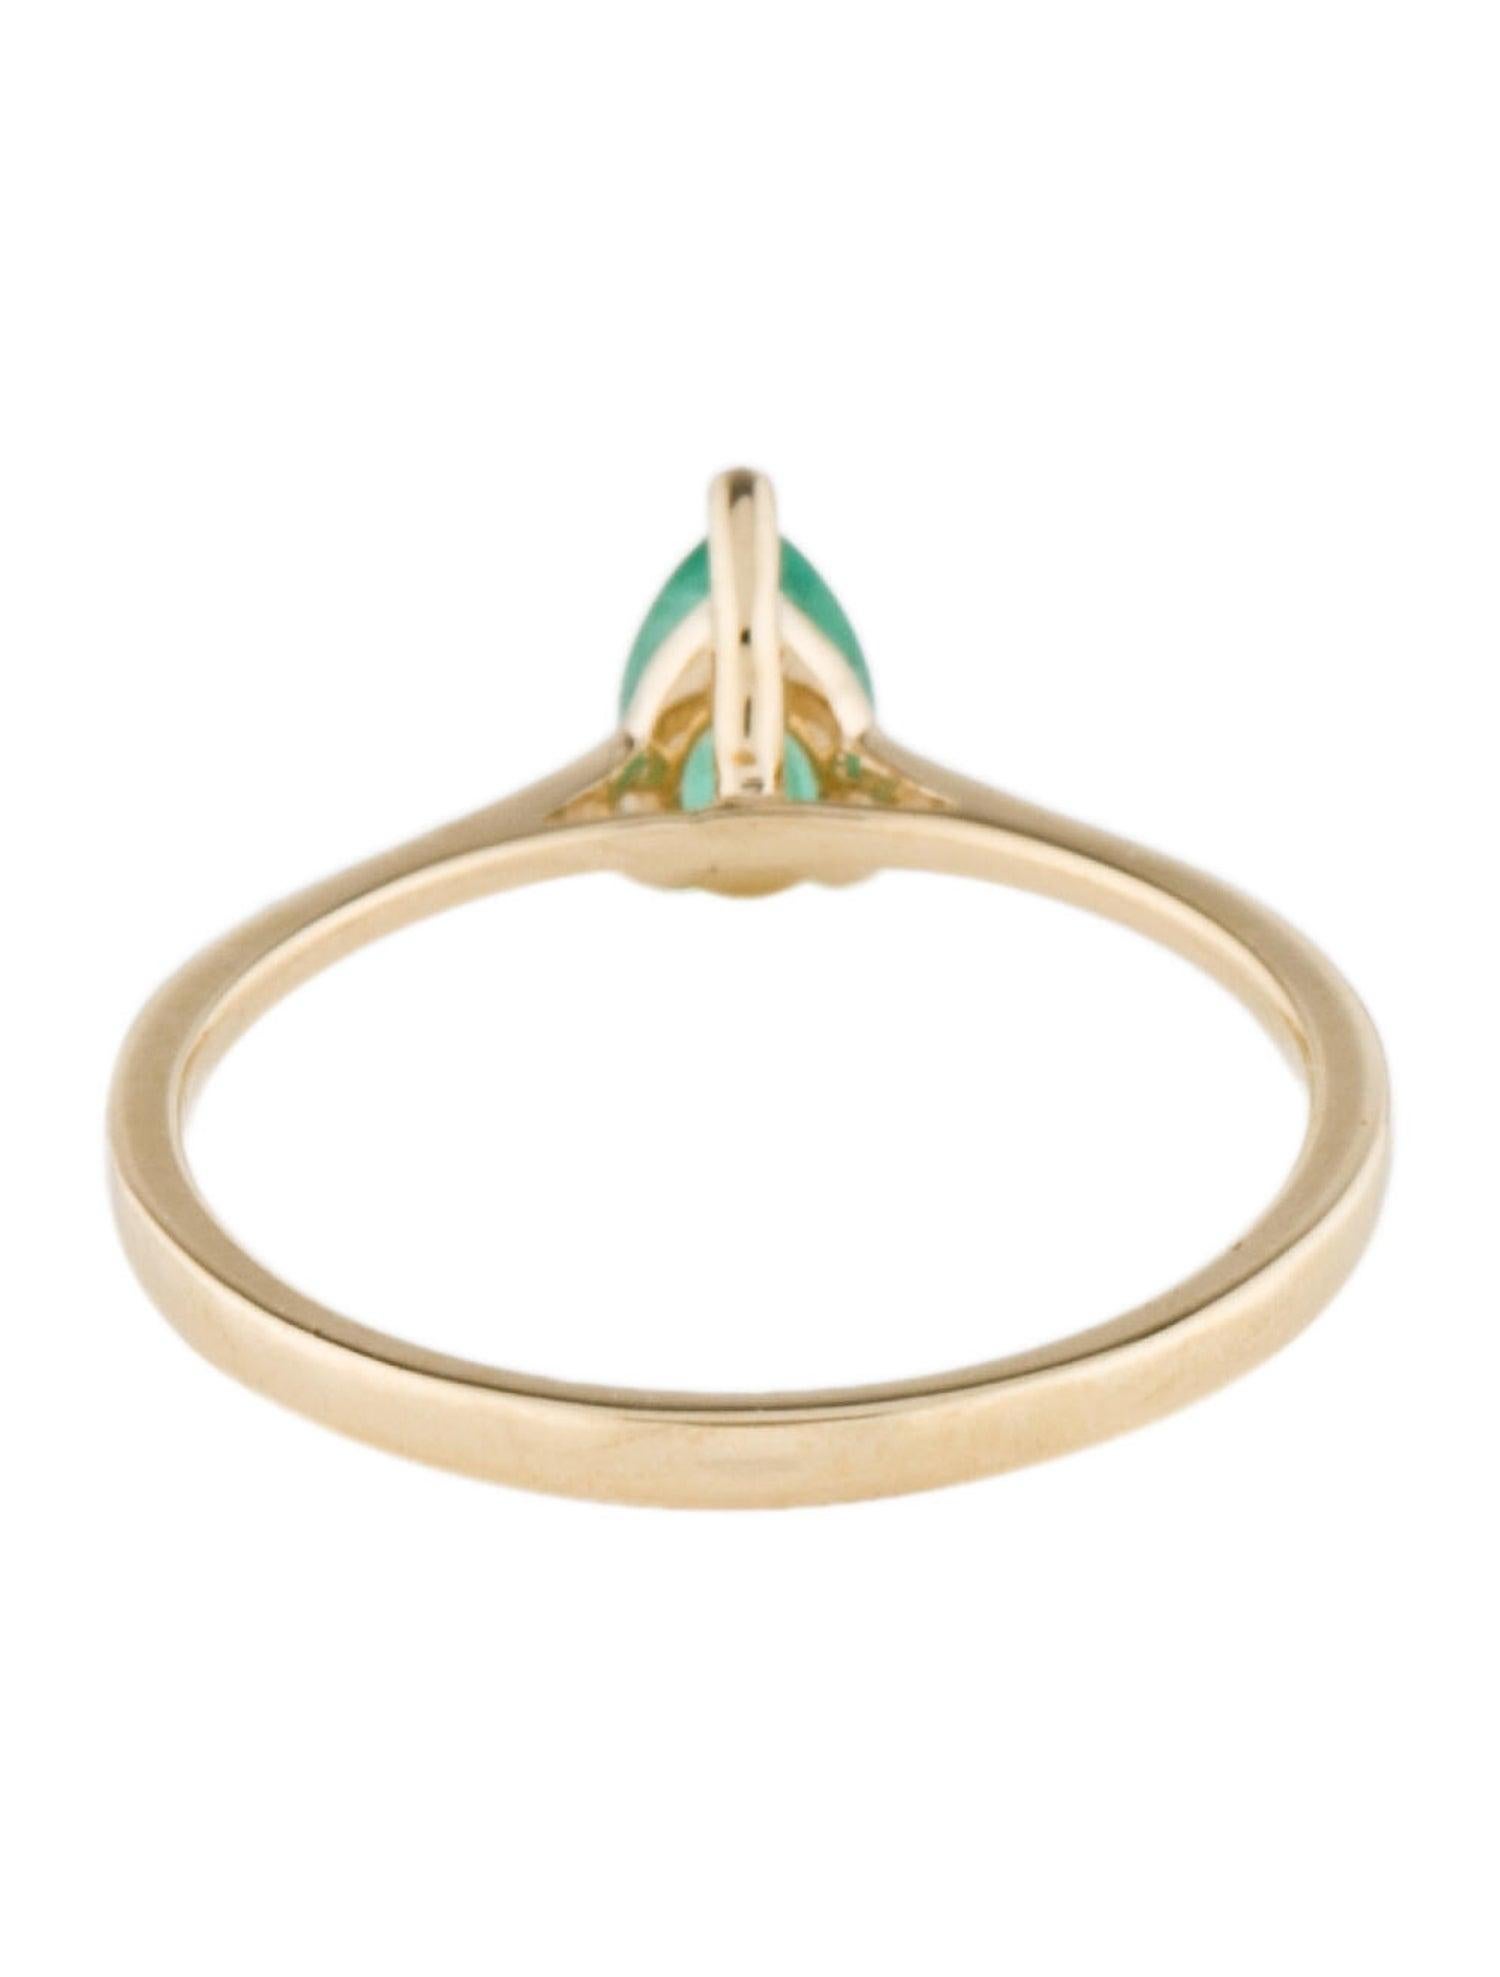 Brilliant Cut Opulent 14K Emerald Cocktail Ring, Size 7 - Elegant Statement Jewelry For Sale